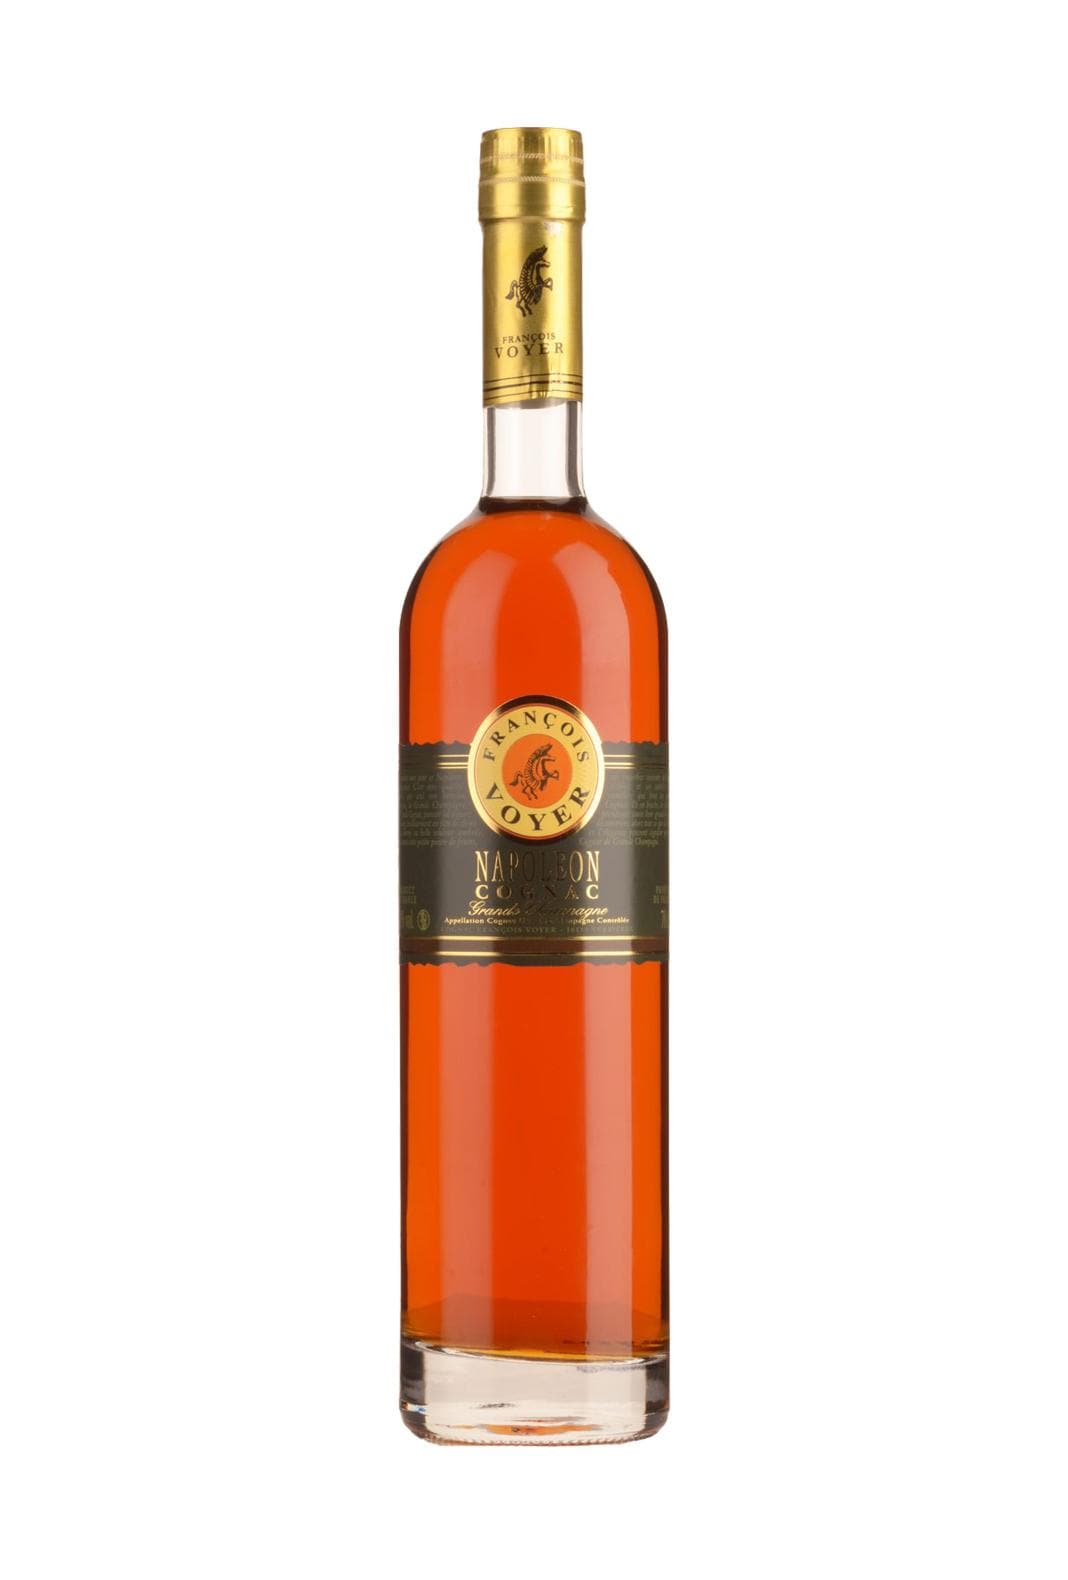 Francois Voyer Cognac Napoleon 15 years 40% 700ml | Brandy | Shop online at Spirits of France